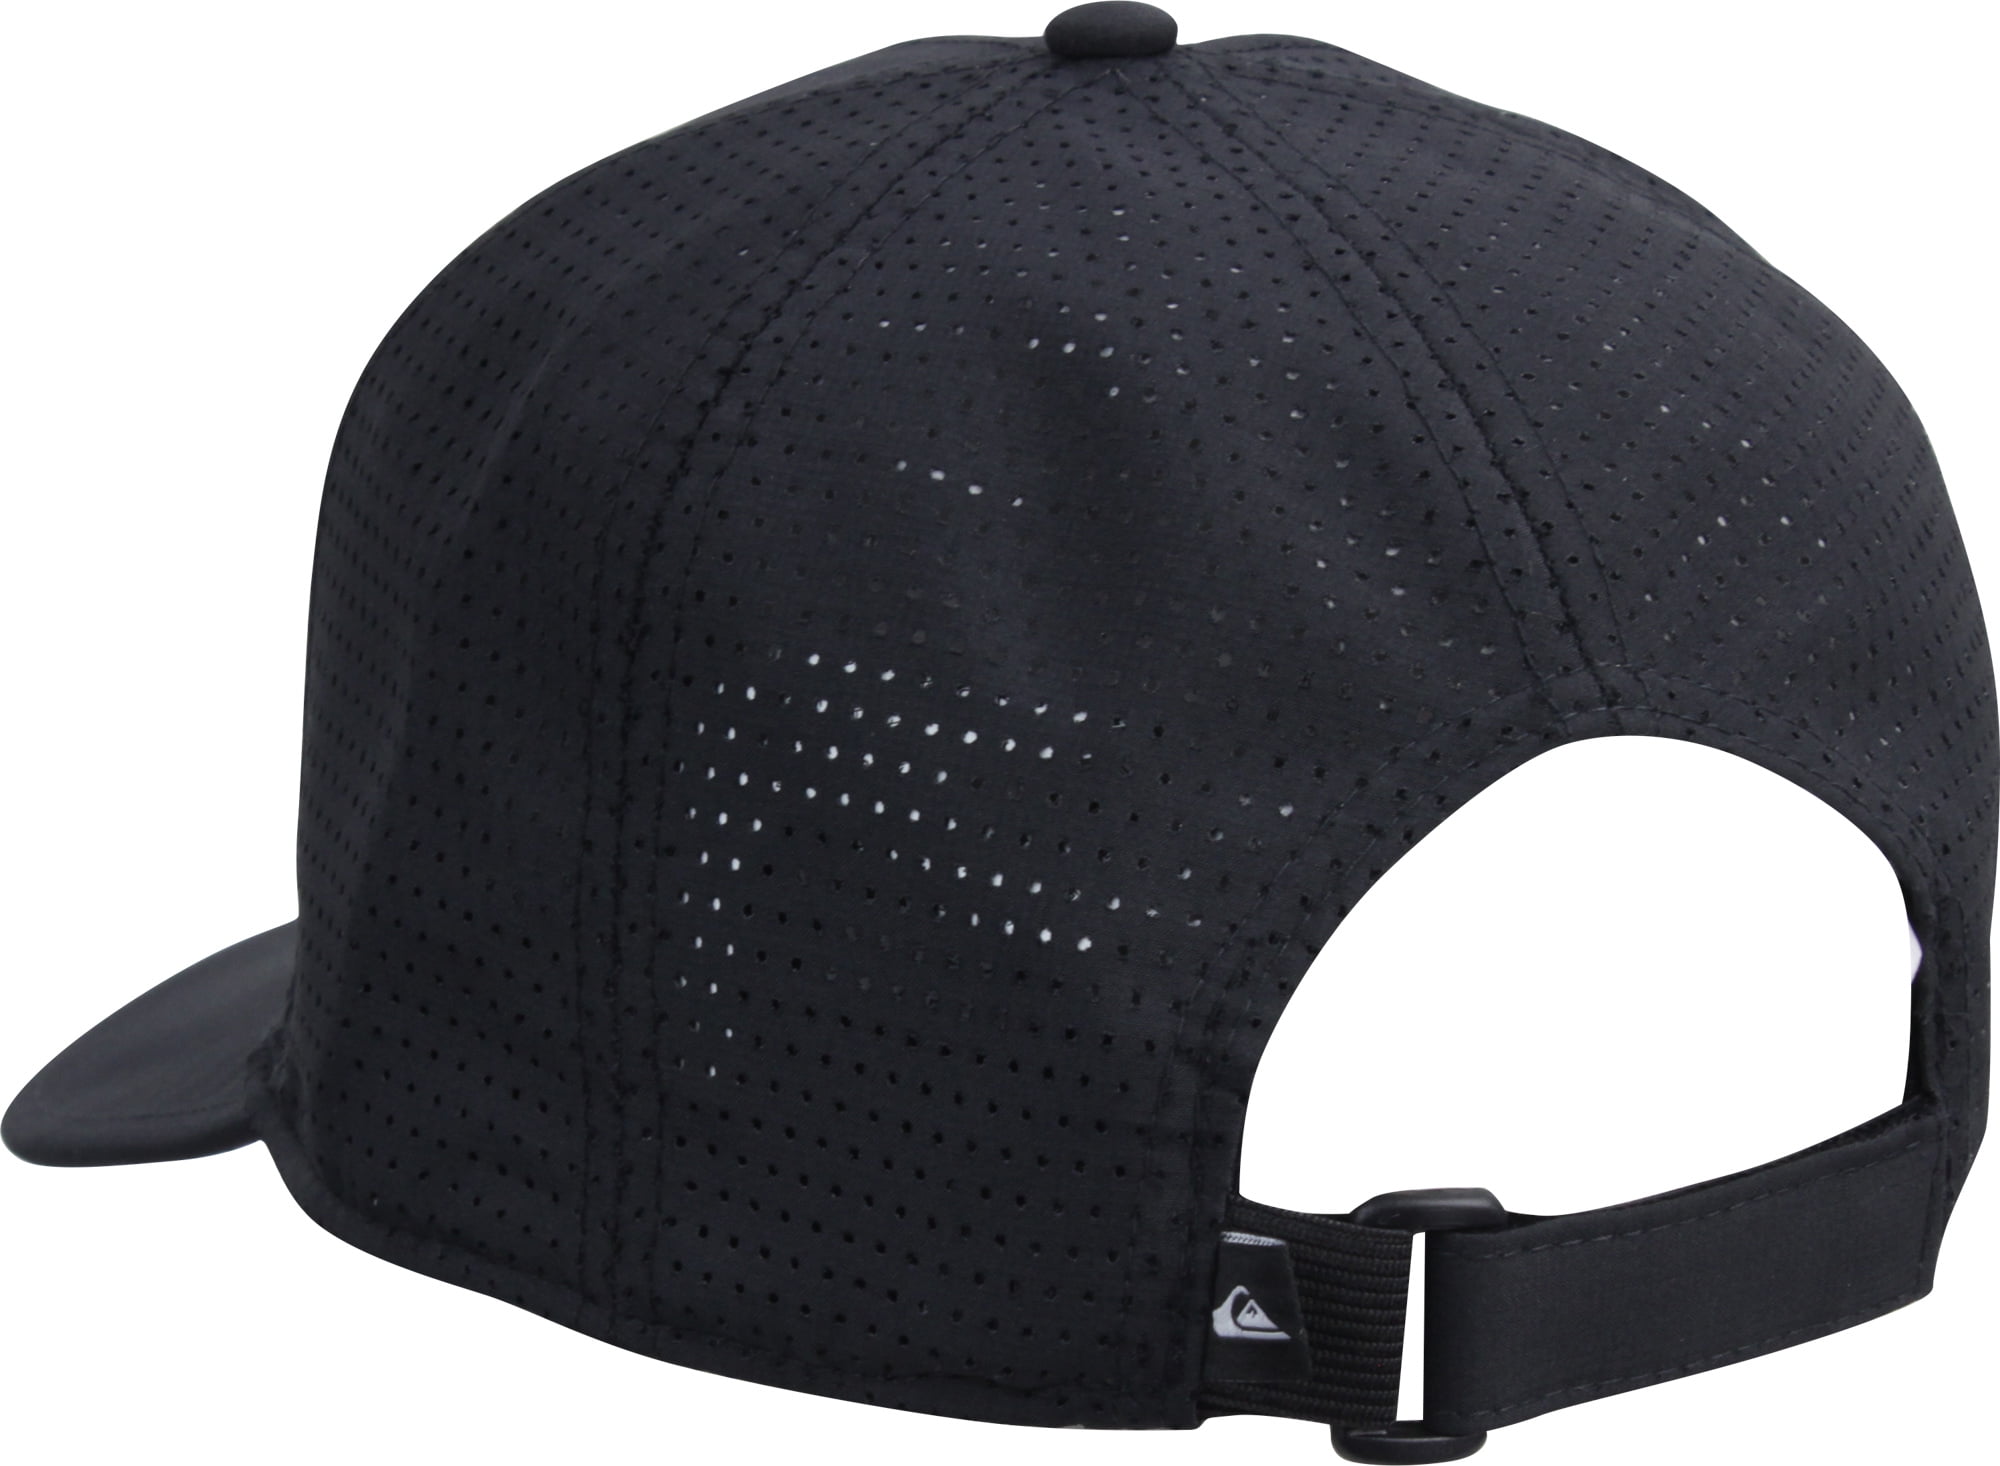 Strapback Black Adjustable Quiksilver Stashin Tech Hat - Mens